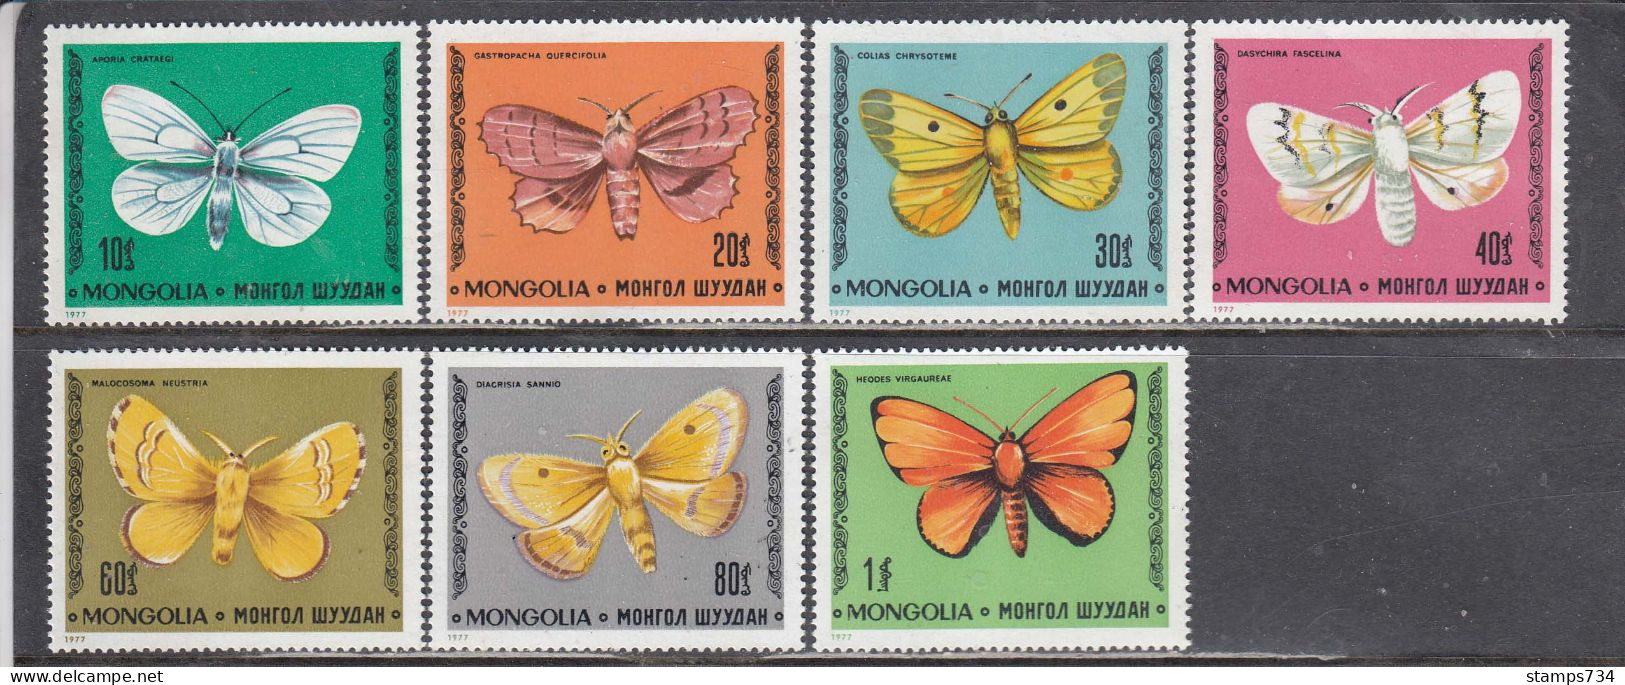 Mongolia 1977 - Butterflies, Mi-Nr. 1099/105, MNH** - Mongolia